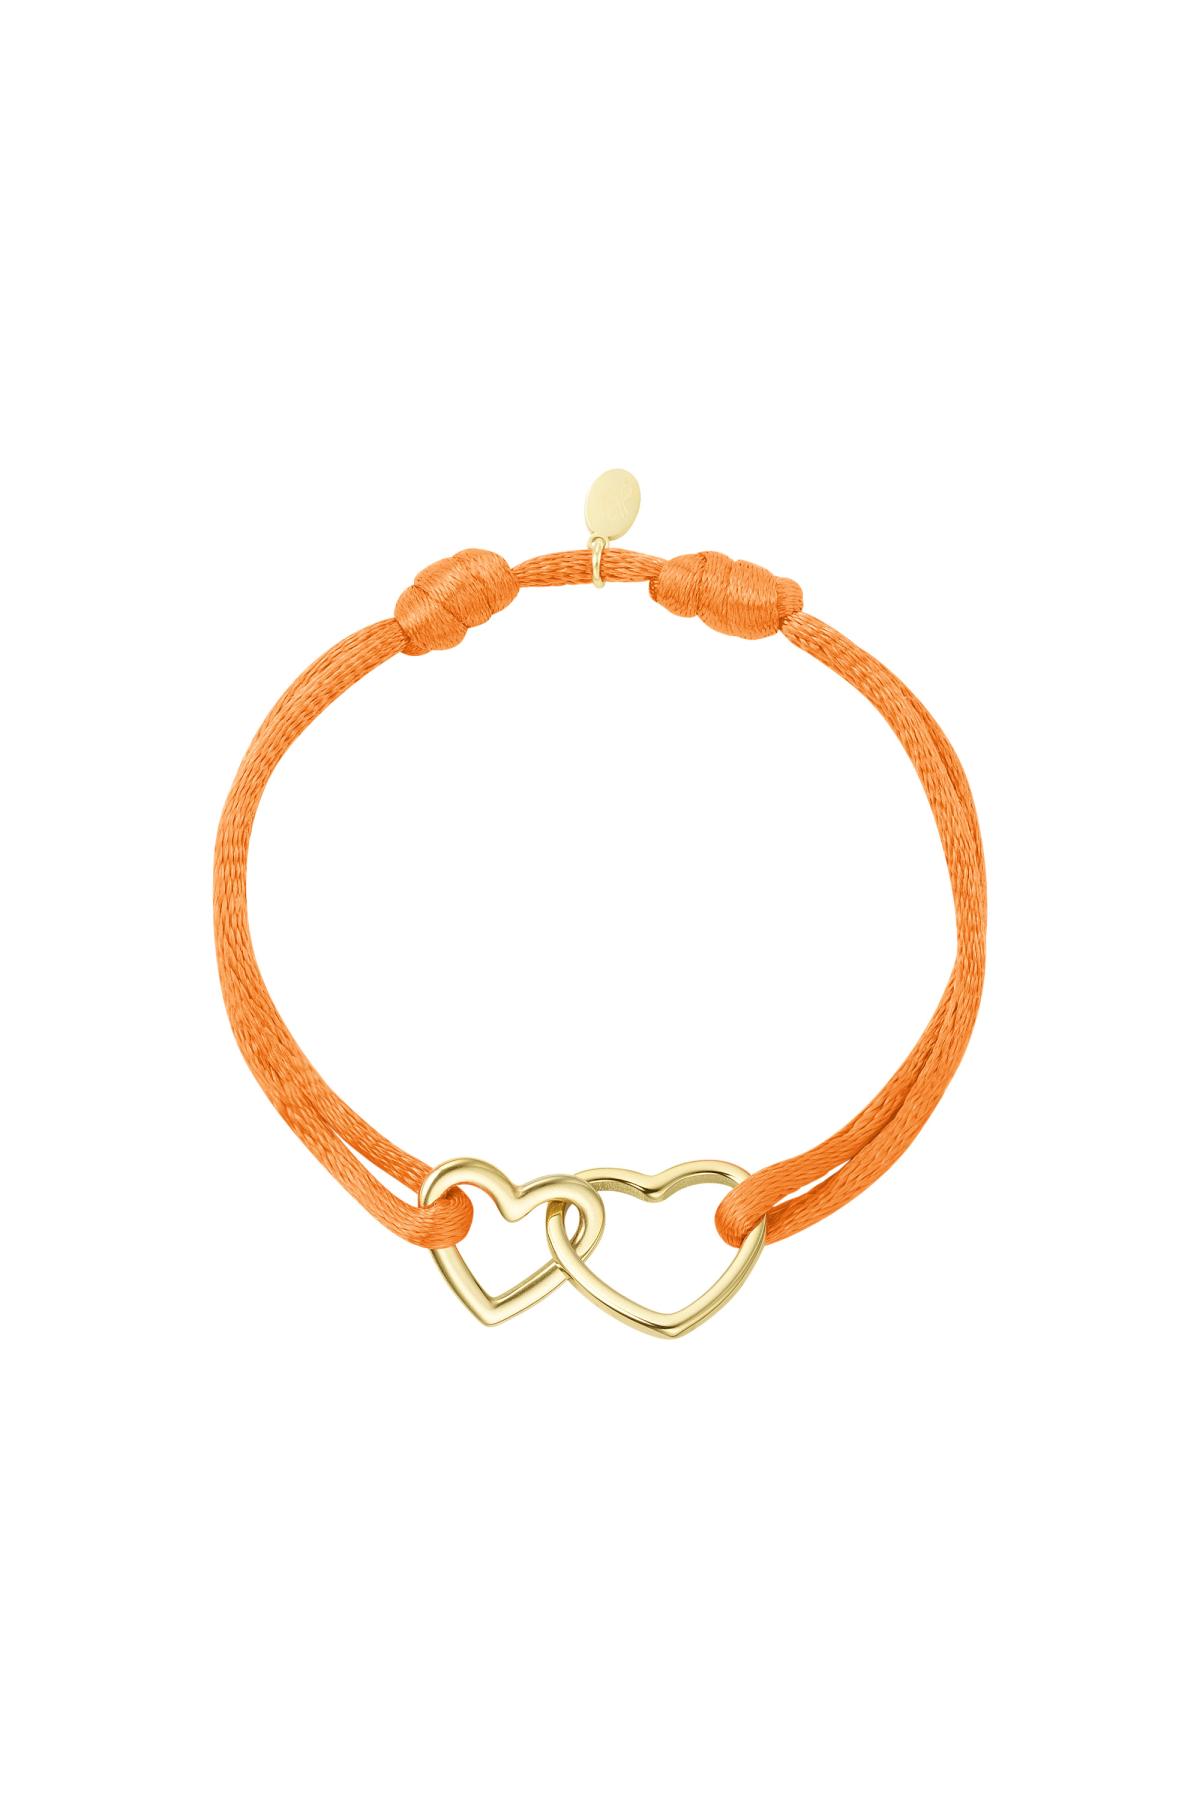 Fabric bracelet hearts Orange &amp; Gold Stainless Steel